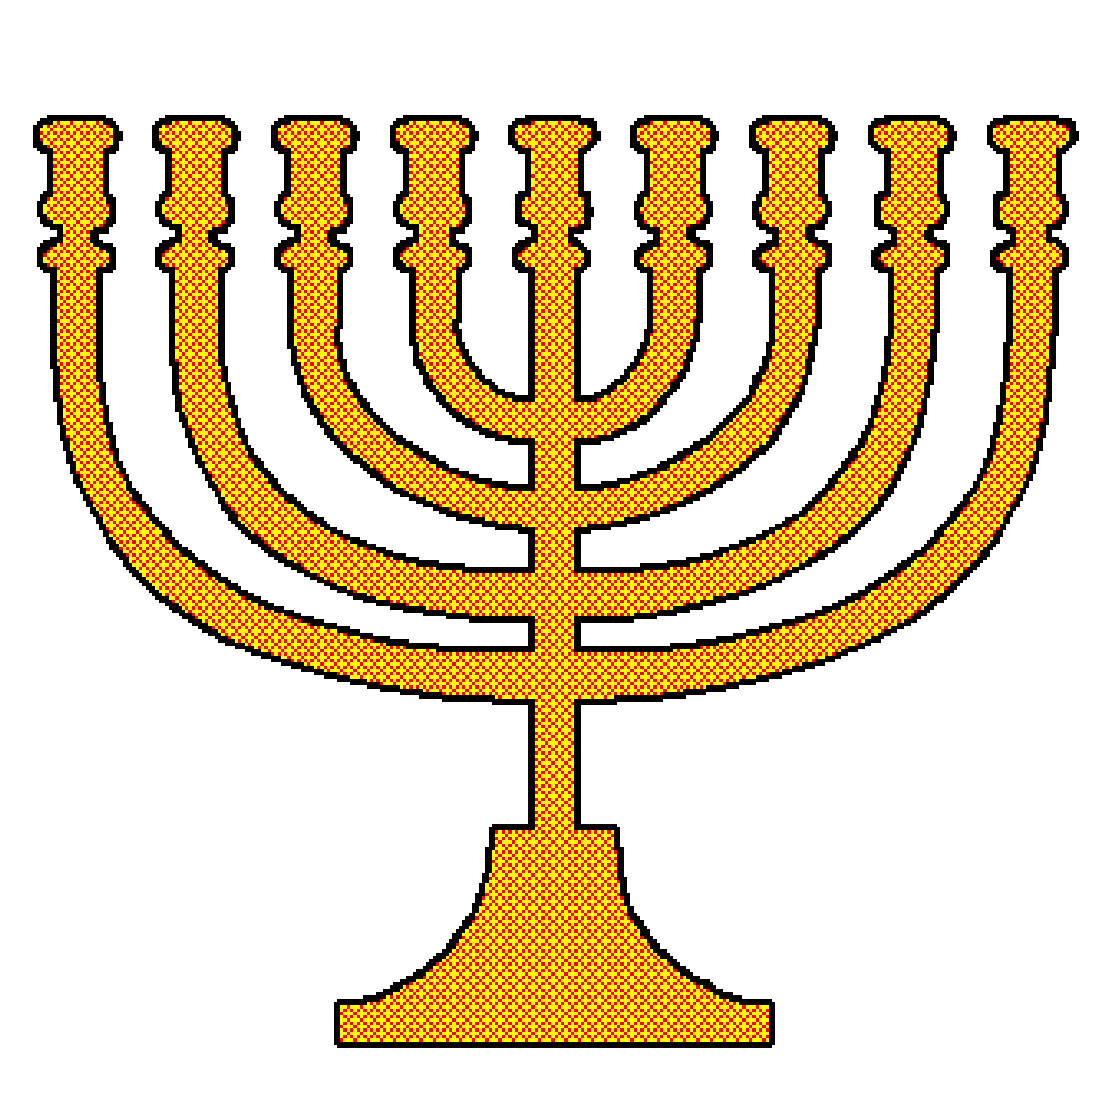 Picture Of Hanukkah Menorah - ClipArt Best